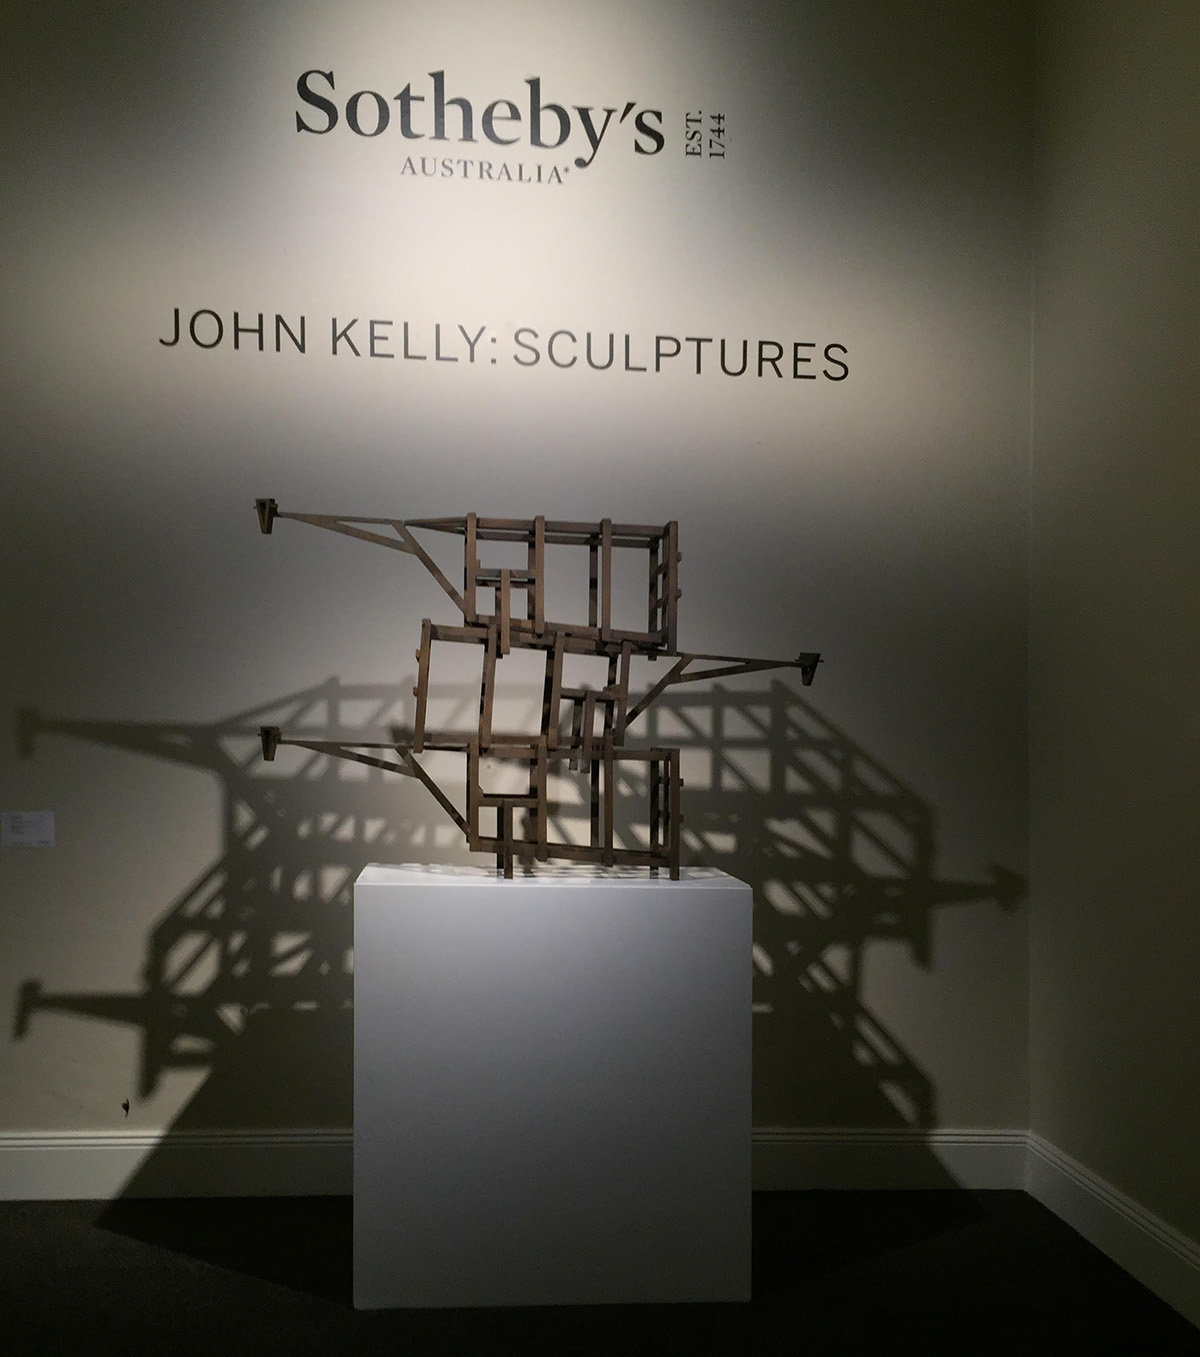 John Kelly sculpture, Sotheby's Australia, 2018